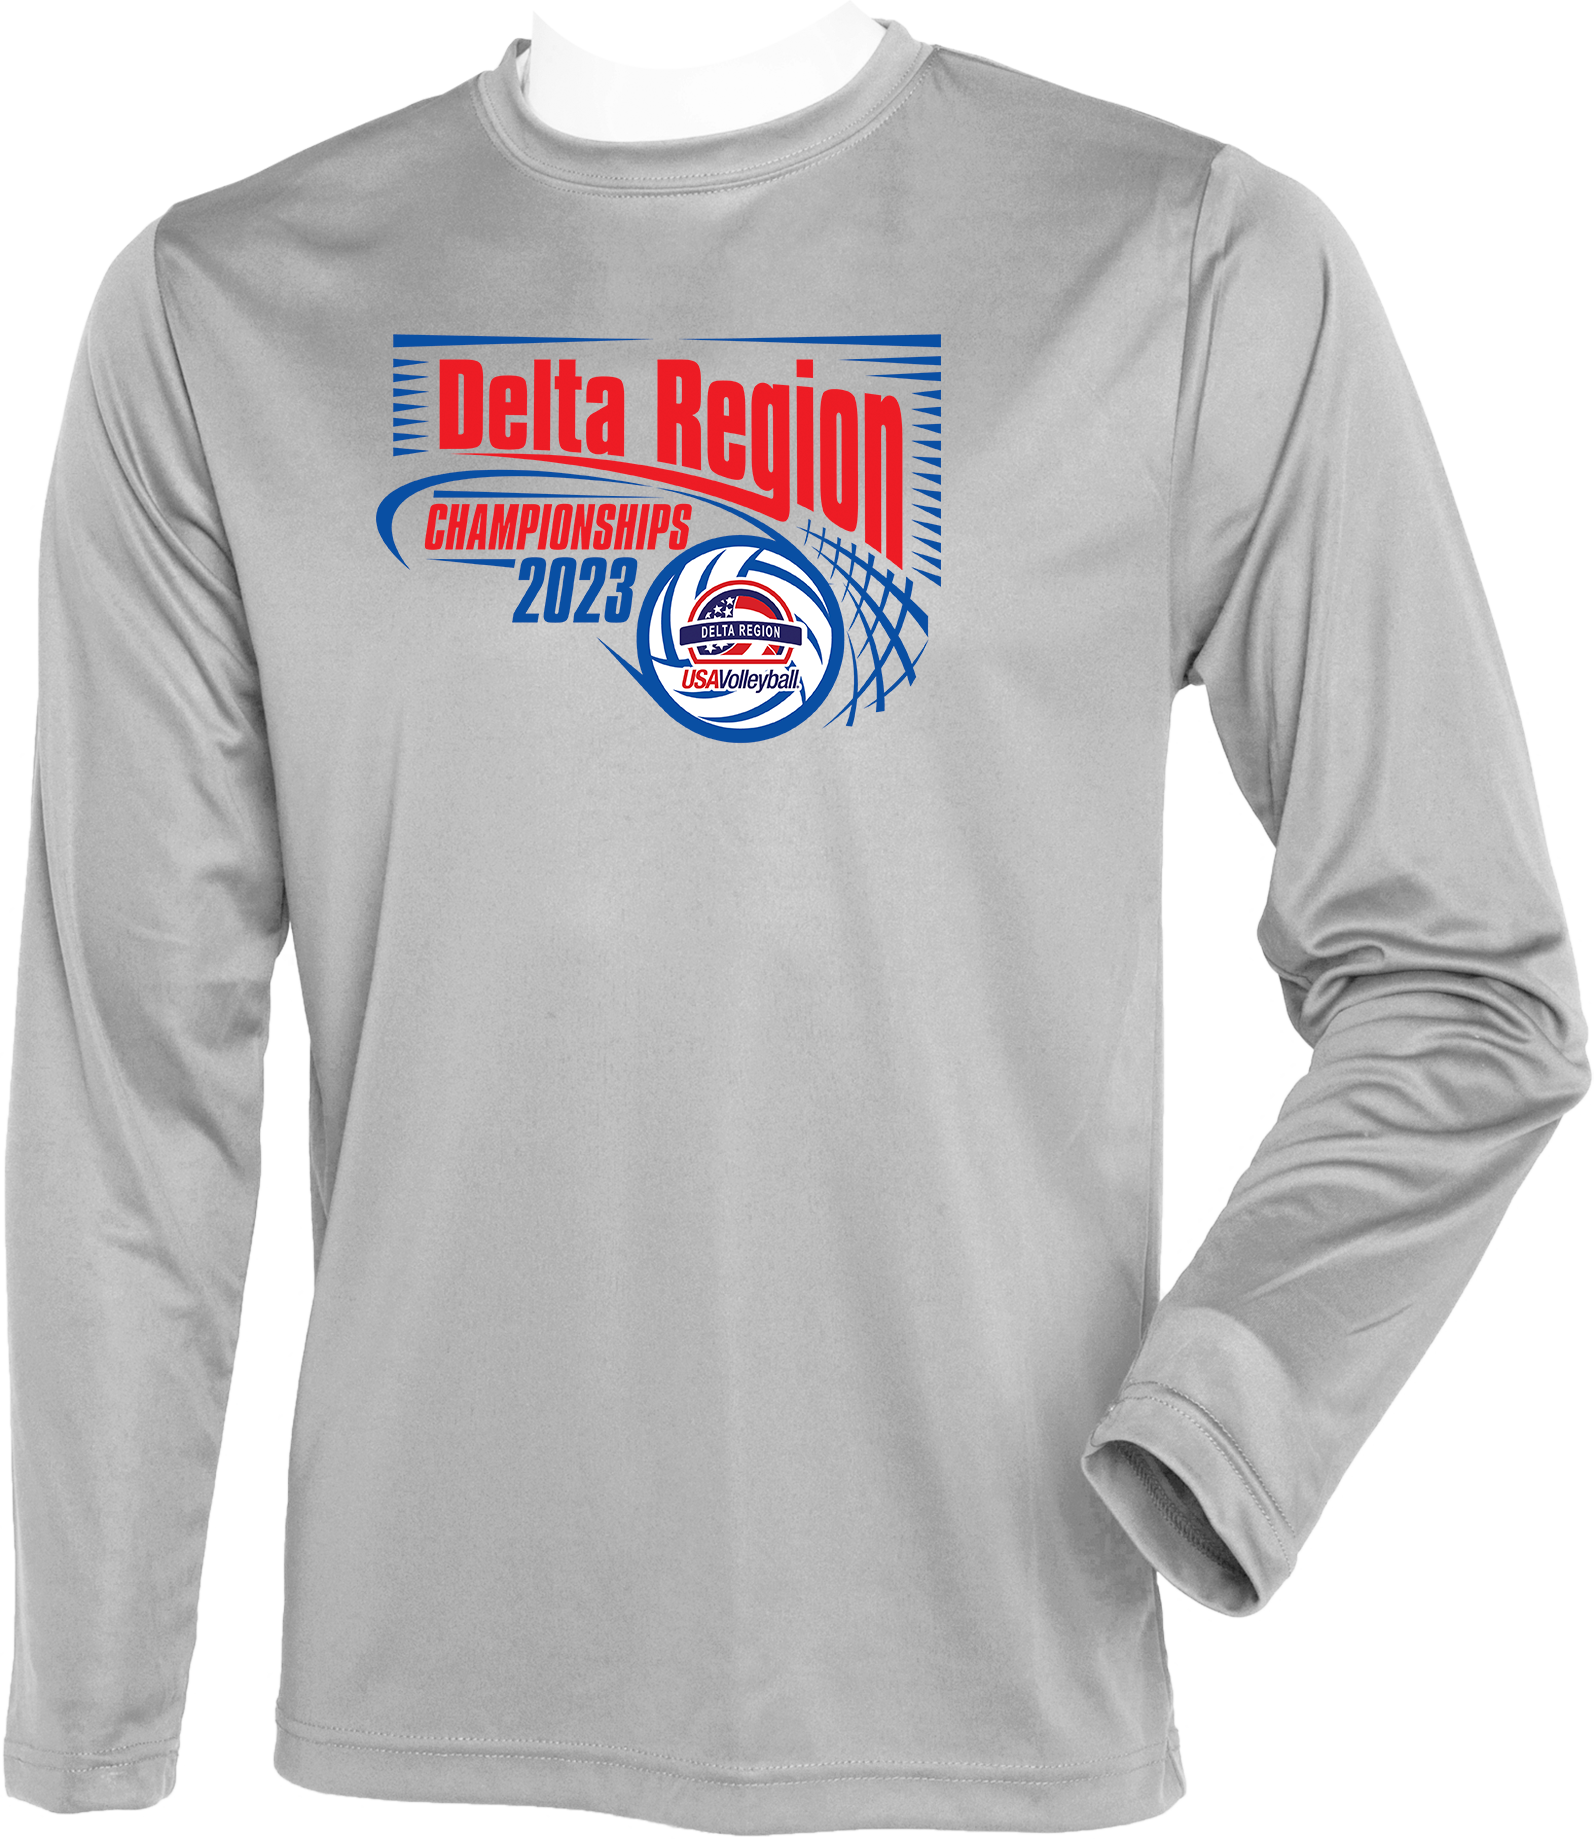 PERFORMANCE SHIRTS - 2023 Delta Region Championships